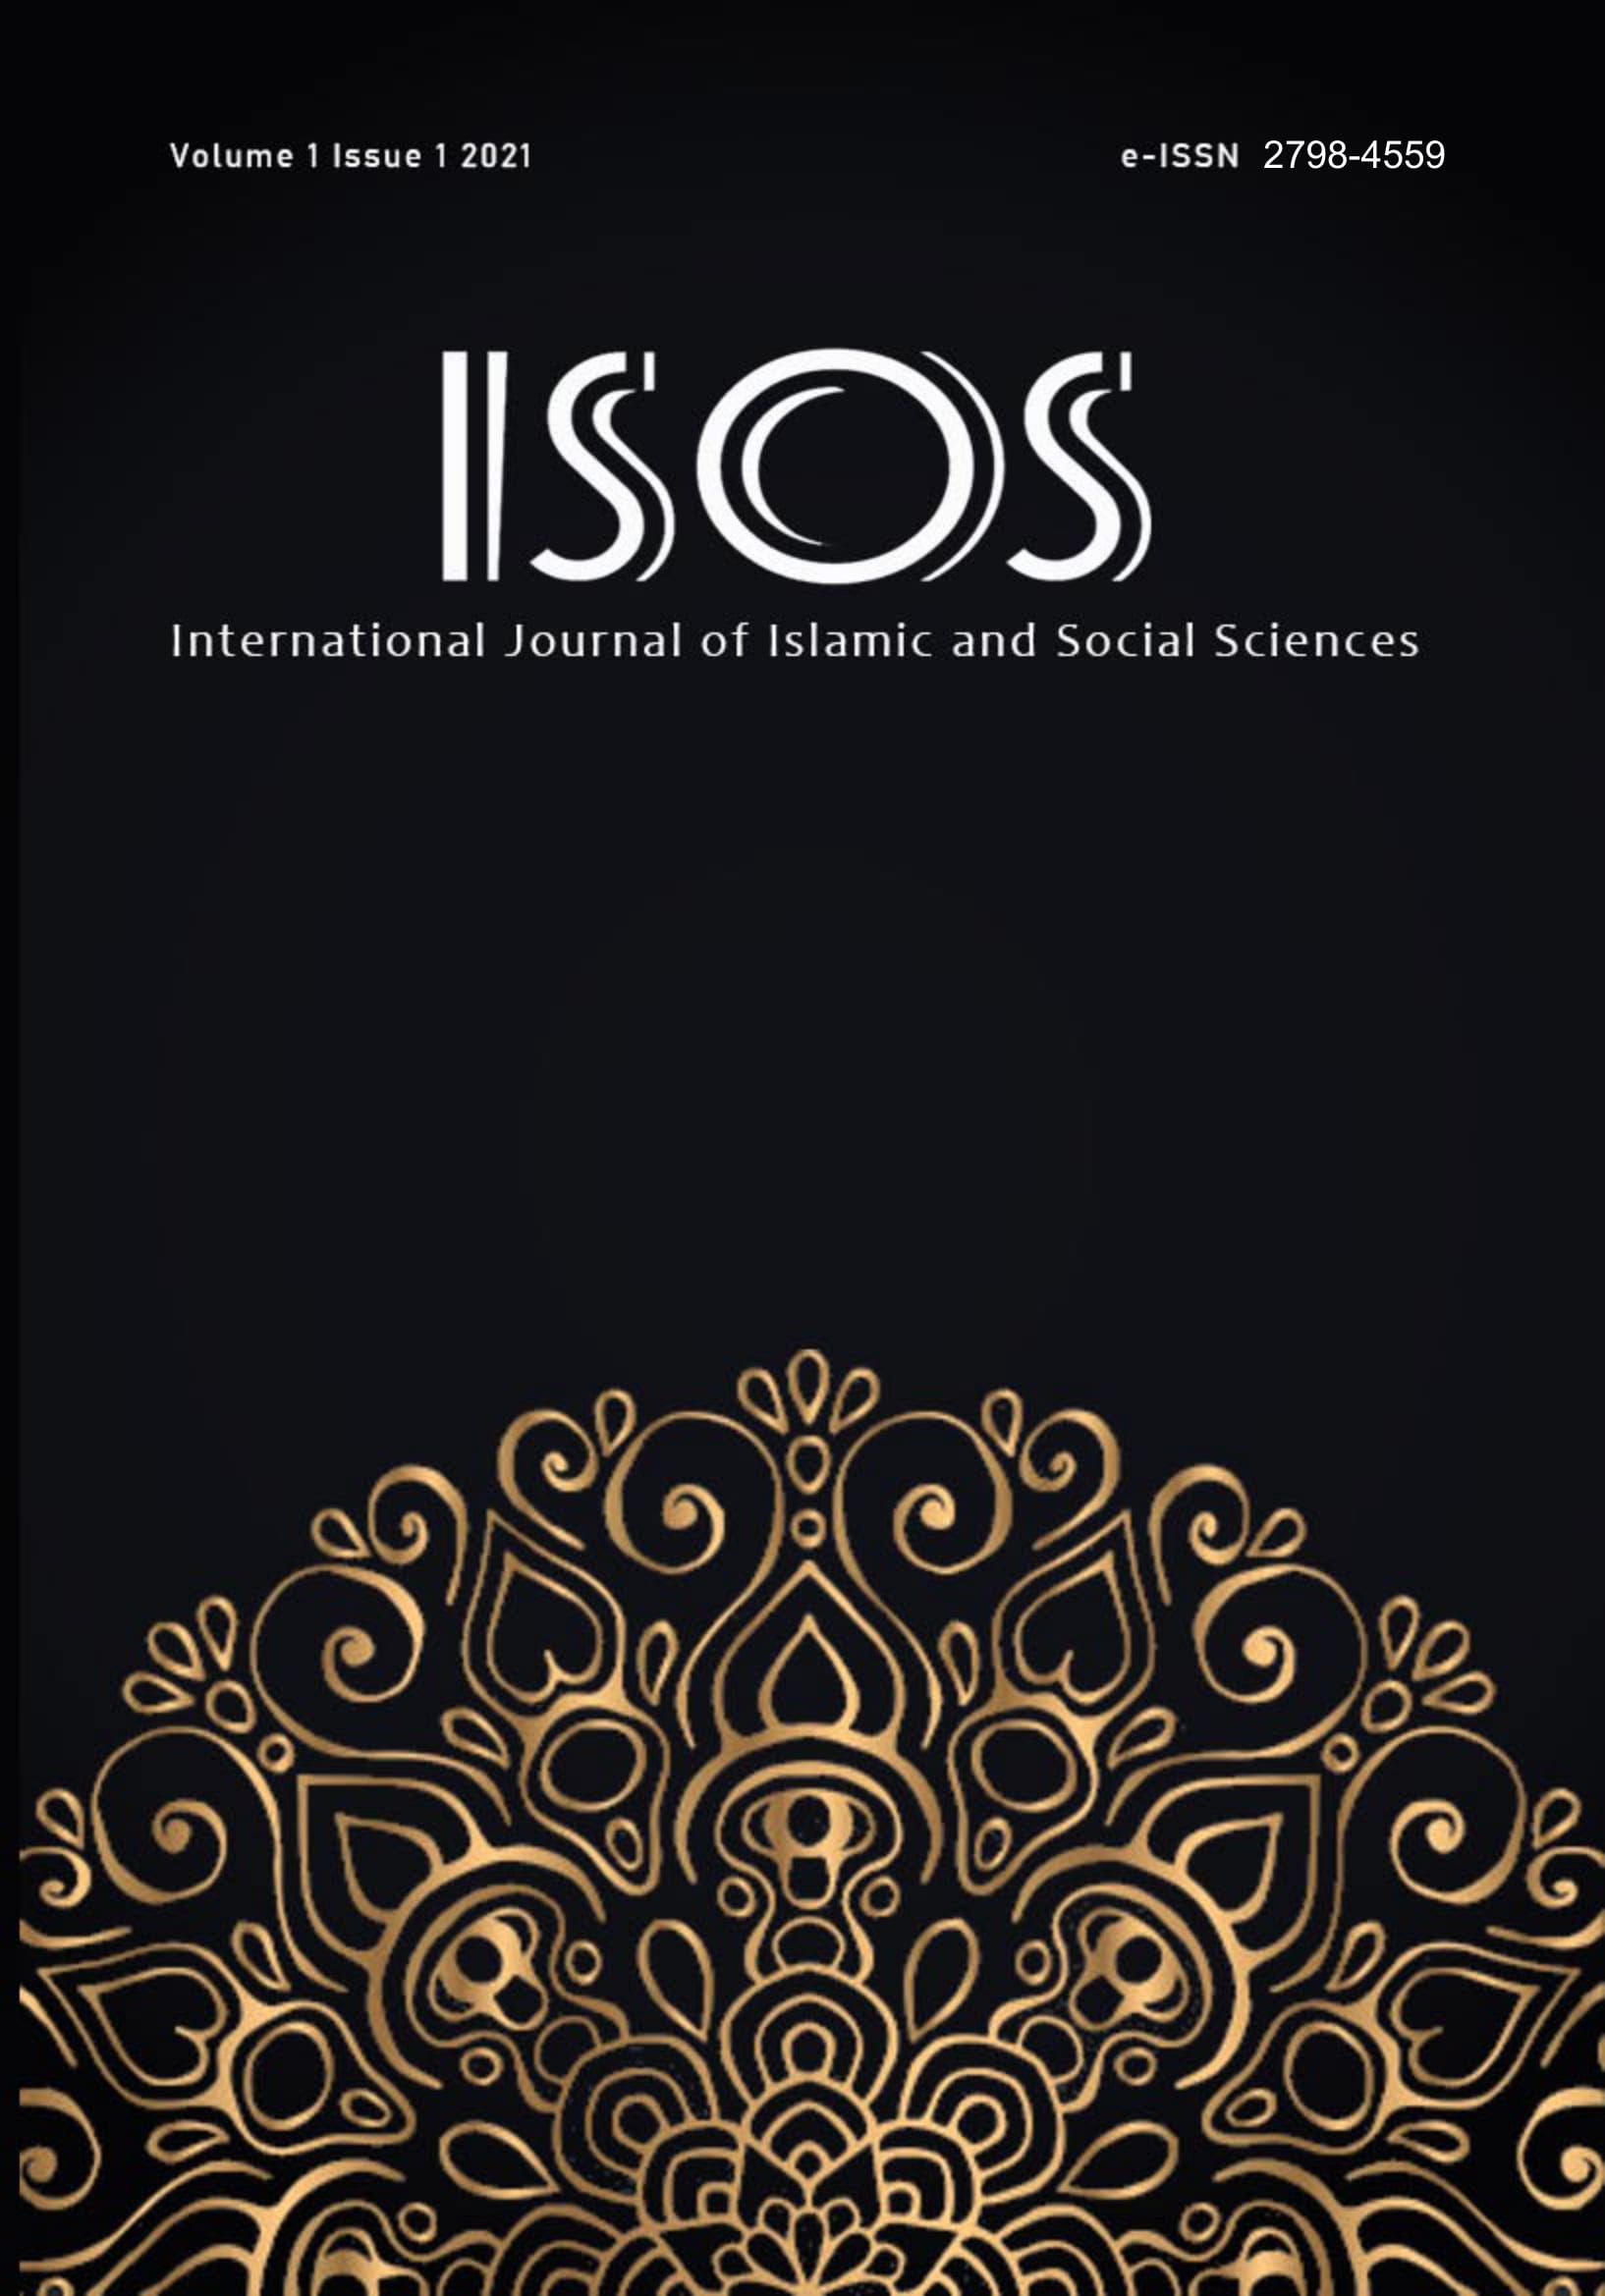 					View Vol. 1 No. 3 (2021): Vol. 1 No. 3 (2021): ISOS : International Journal of Islamic and Social Sciences
				